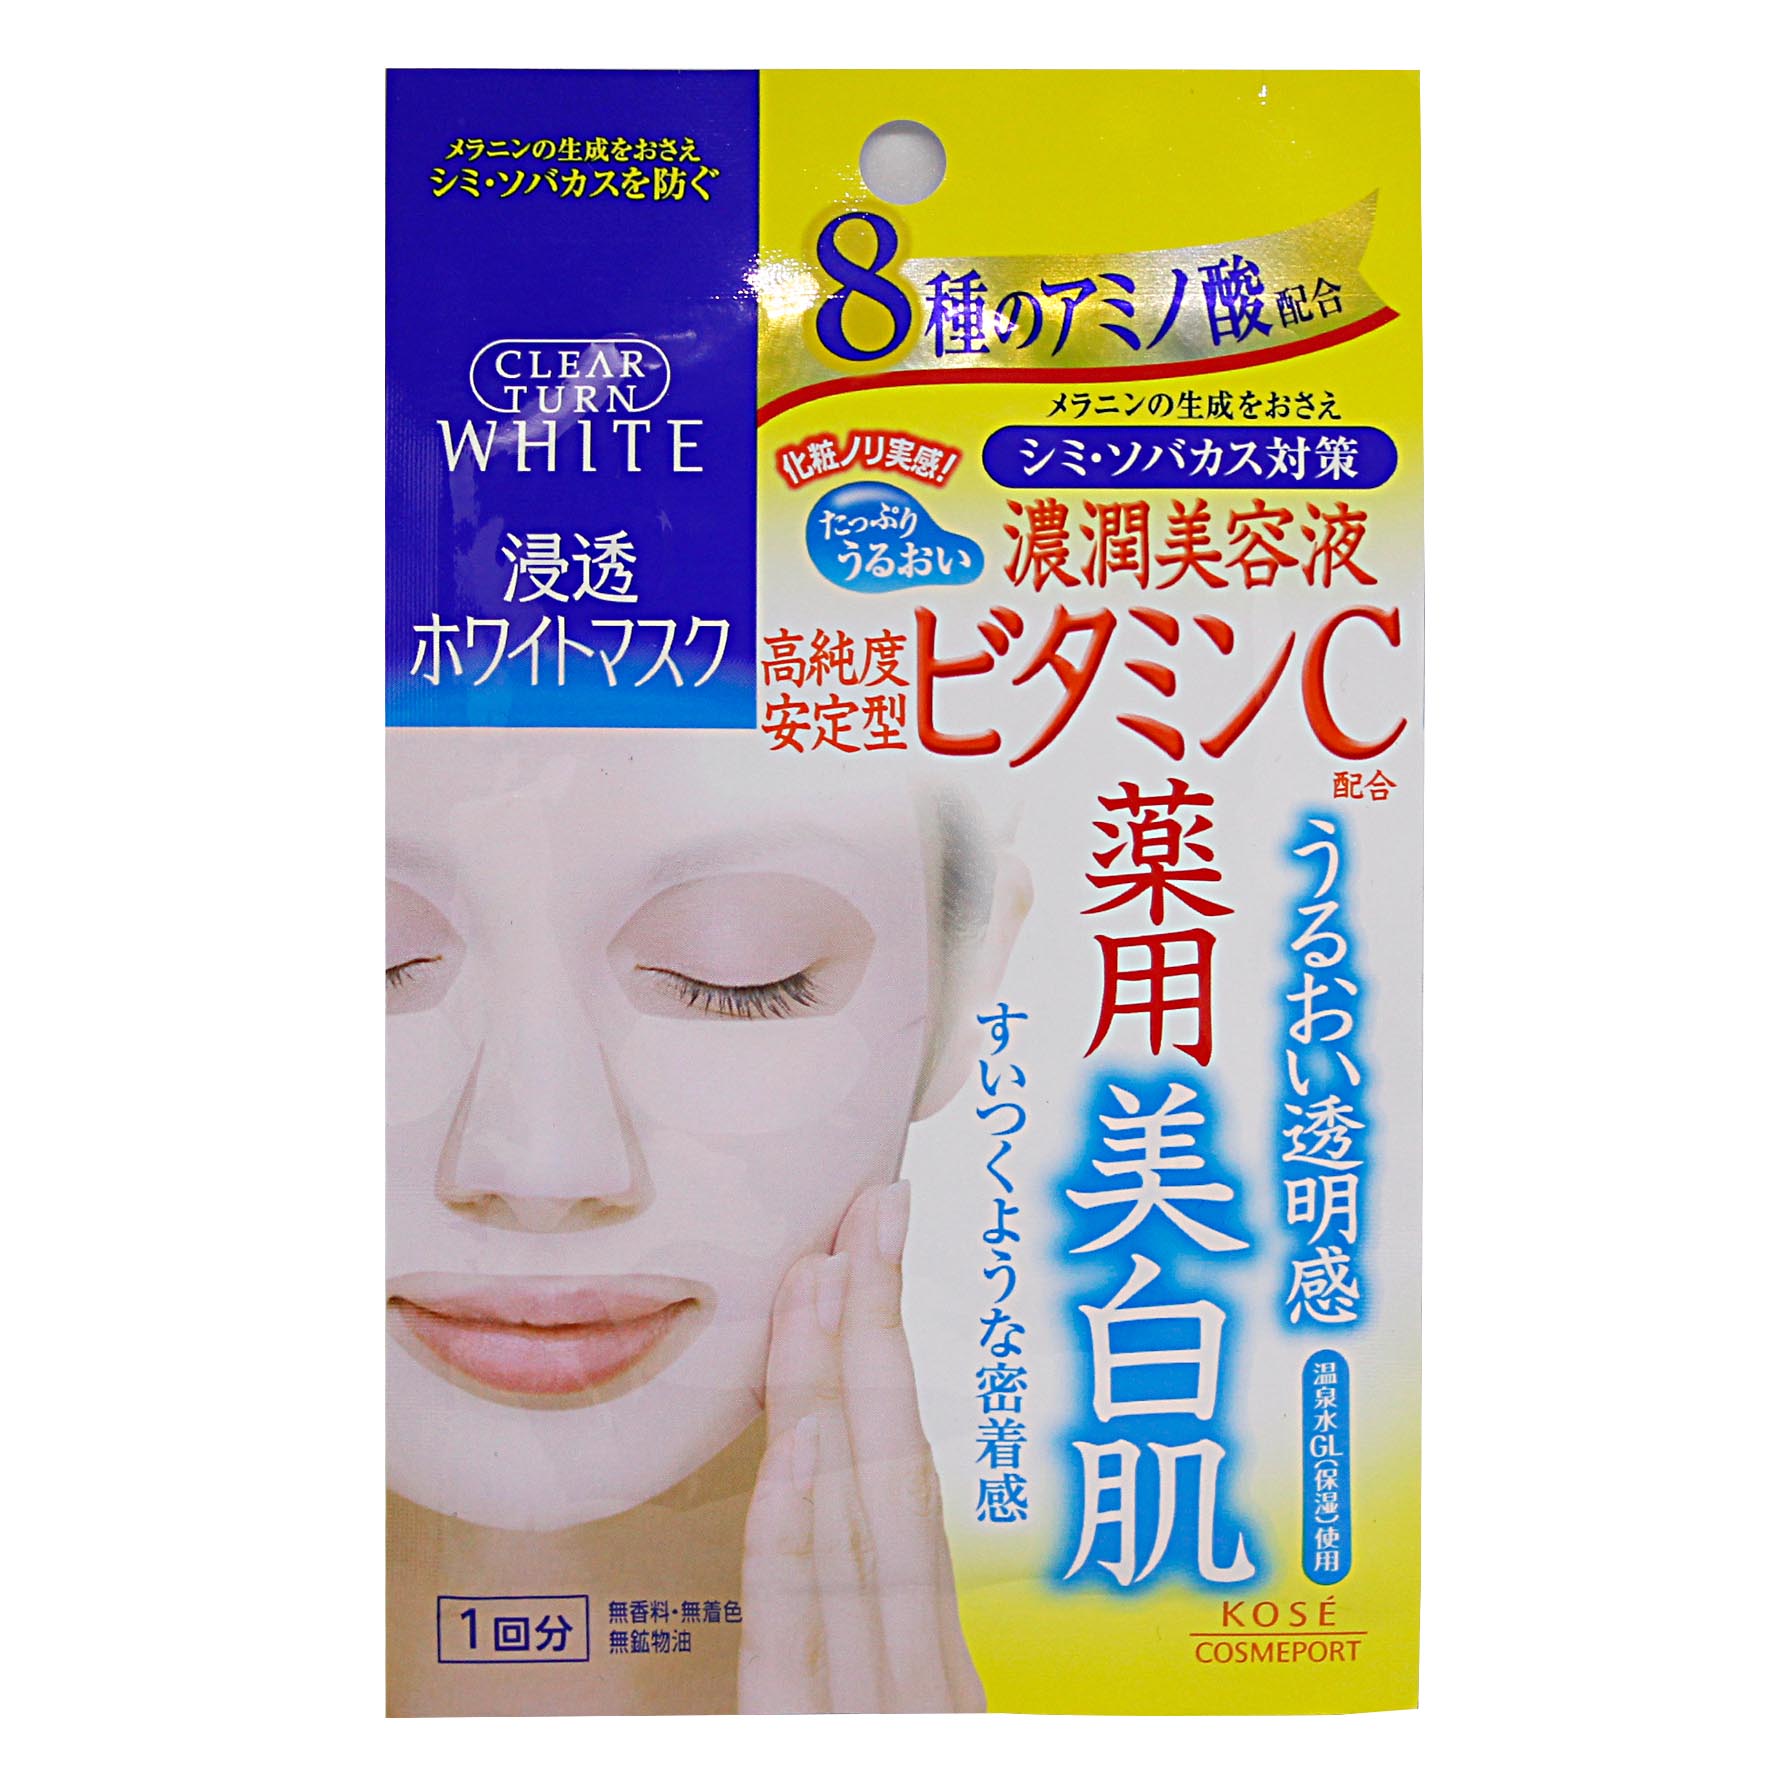 Kose Cosmeport Kose Clear Turn White Mask Vitamin C